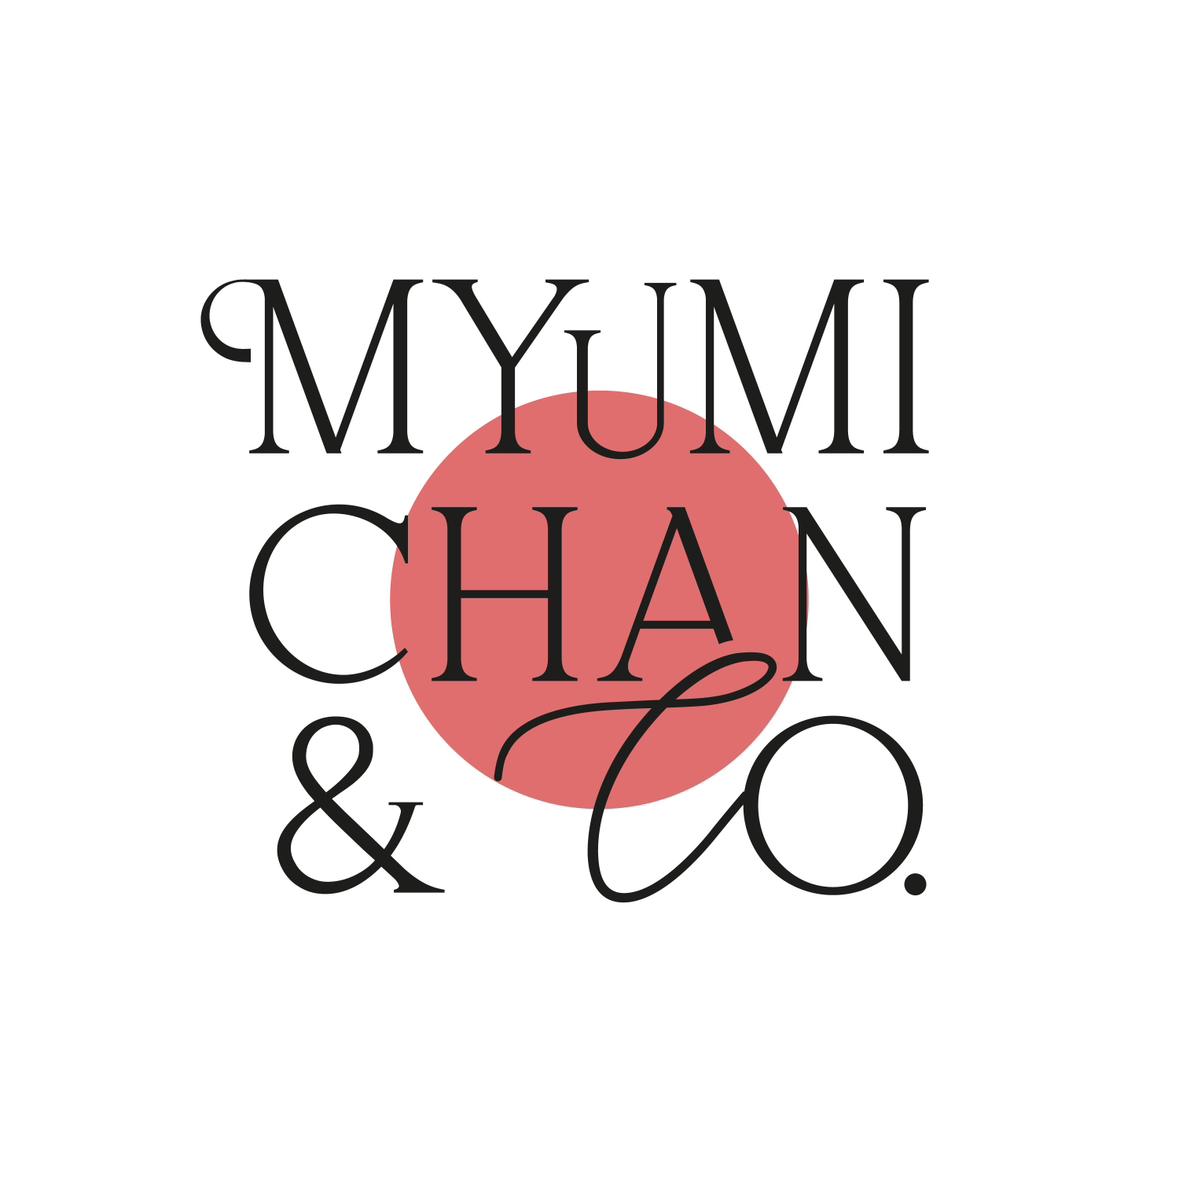 Myumi Chan & Co's images